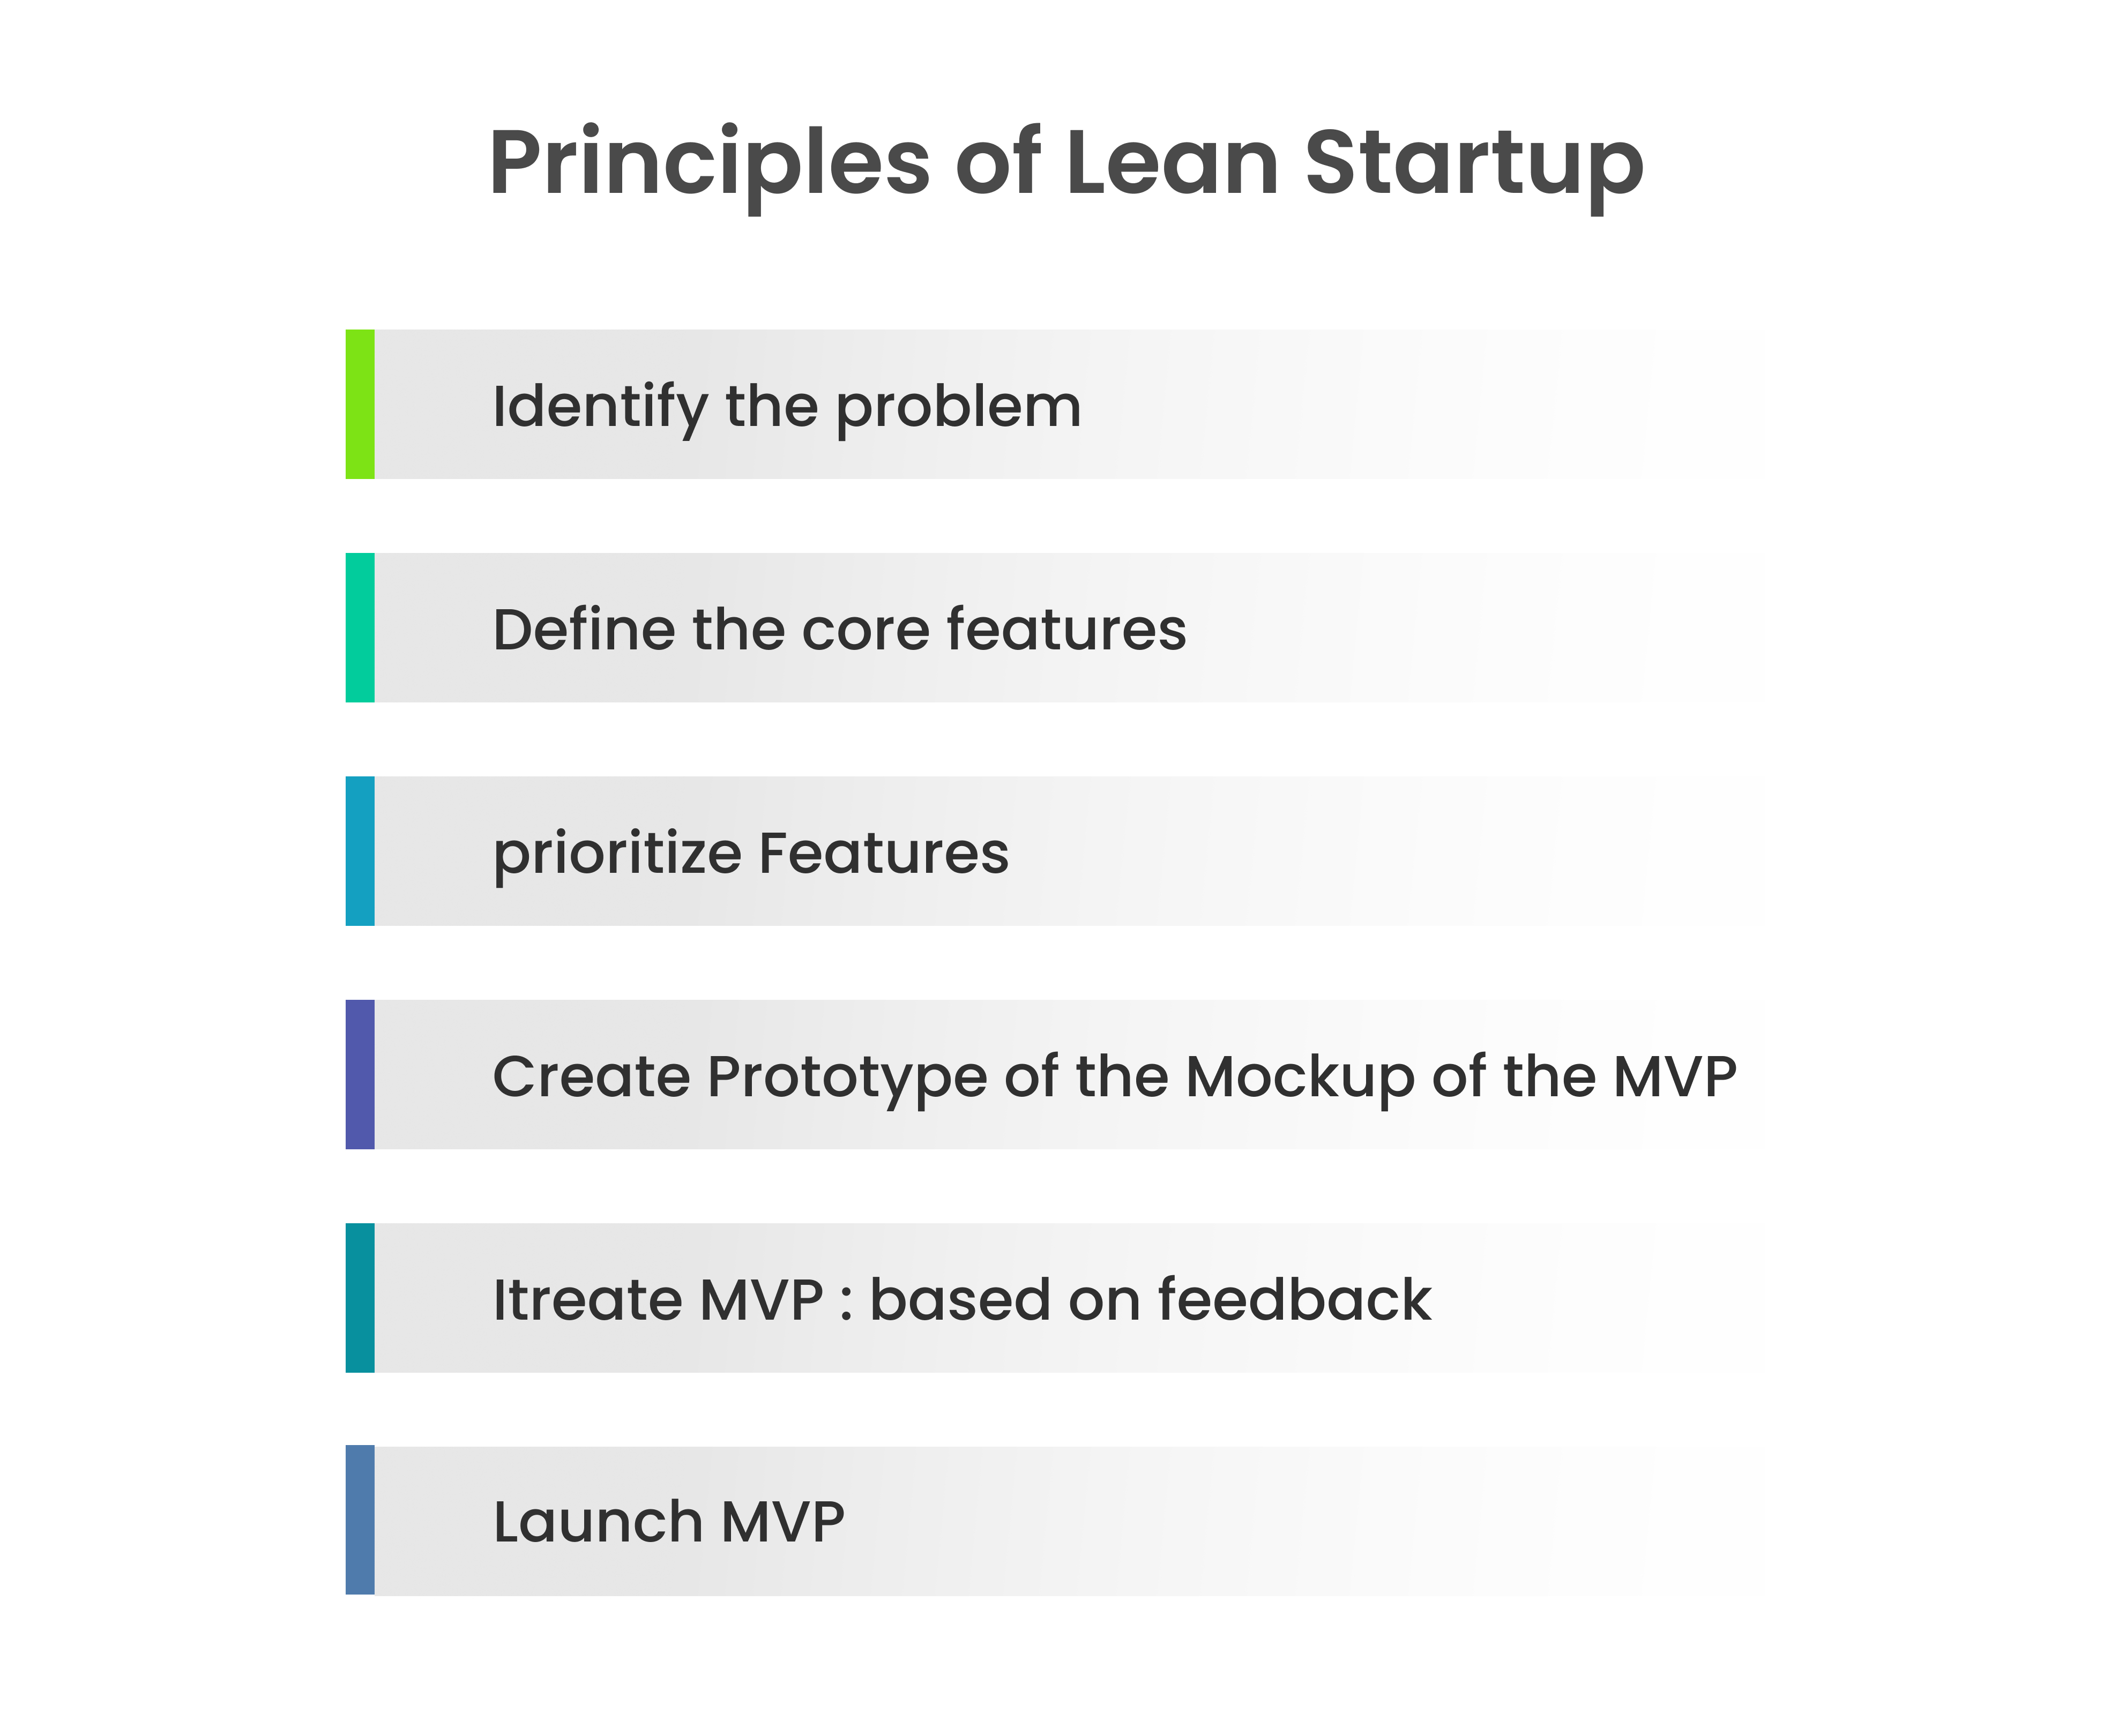 leanstartupmethodology, Lean Startup